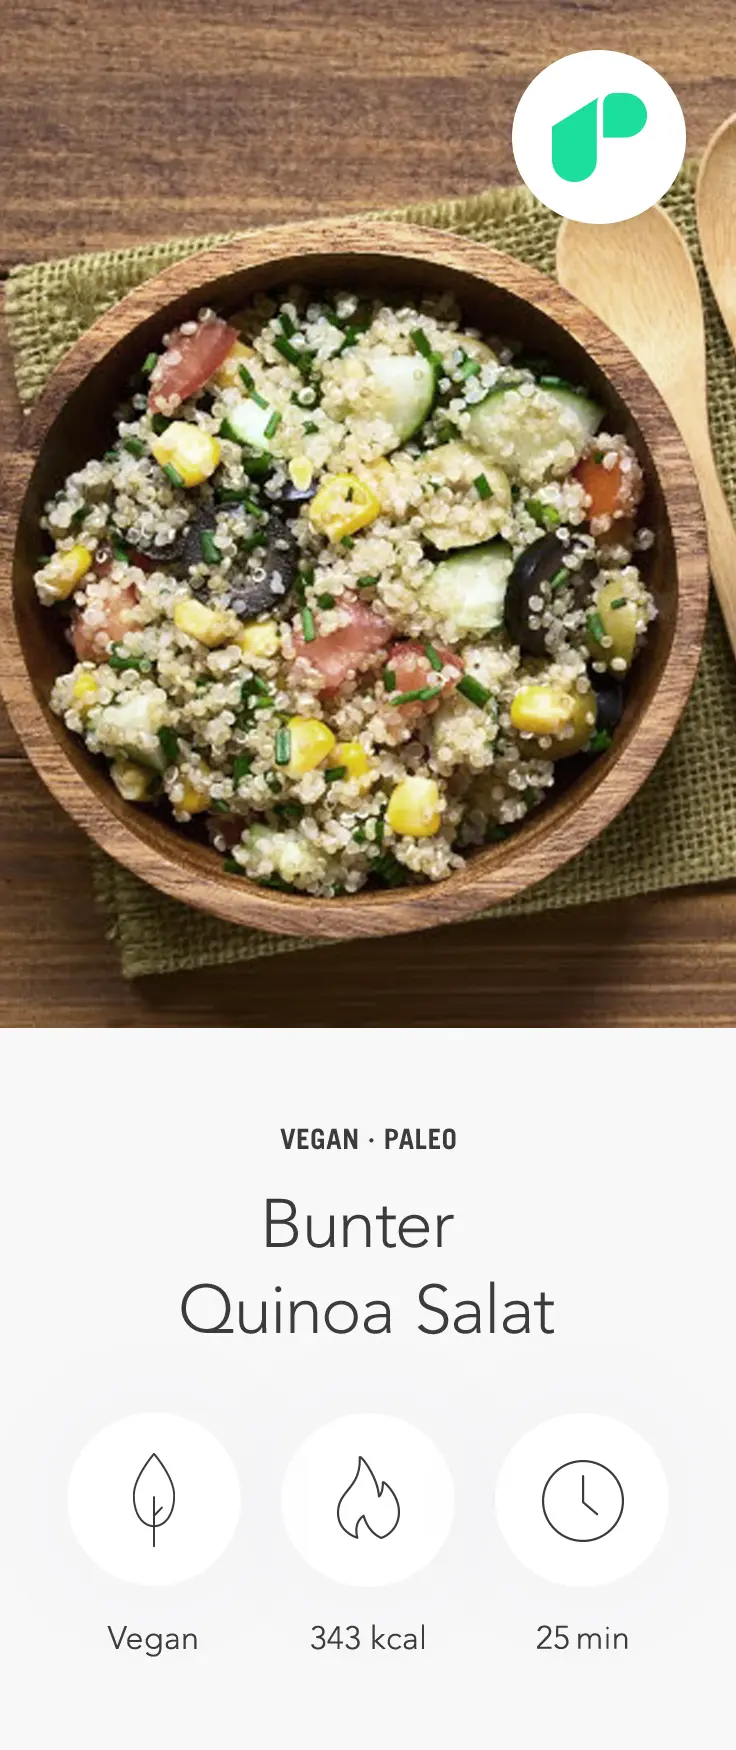 Bunter Quinoa Salat